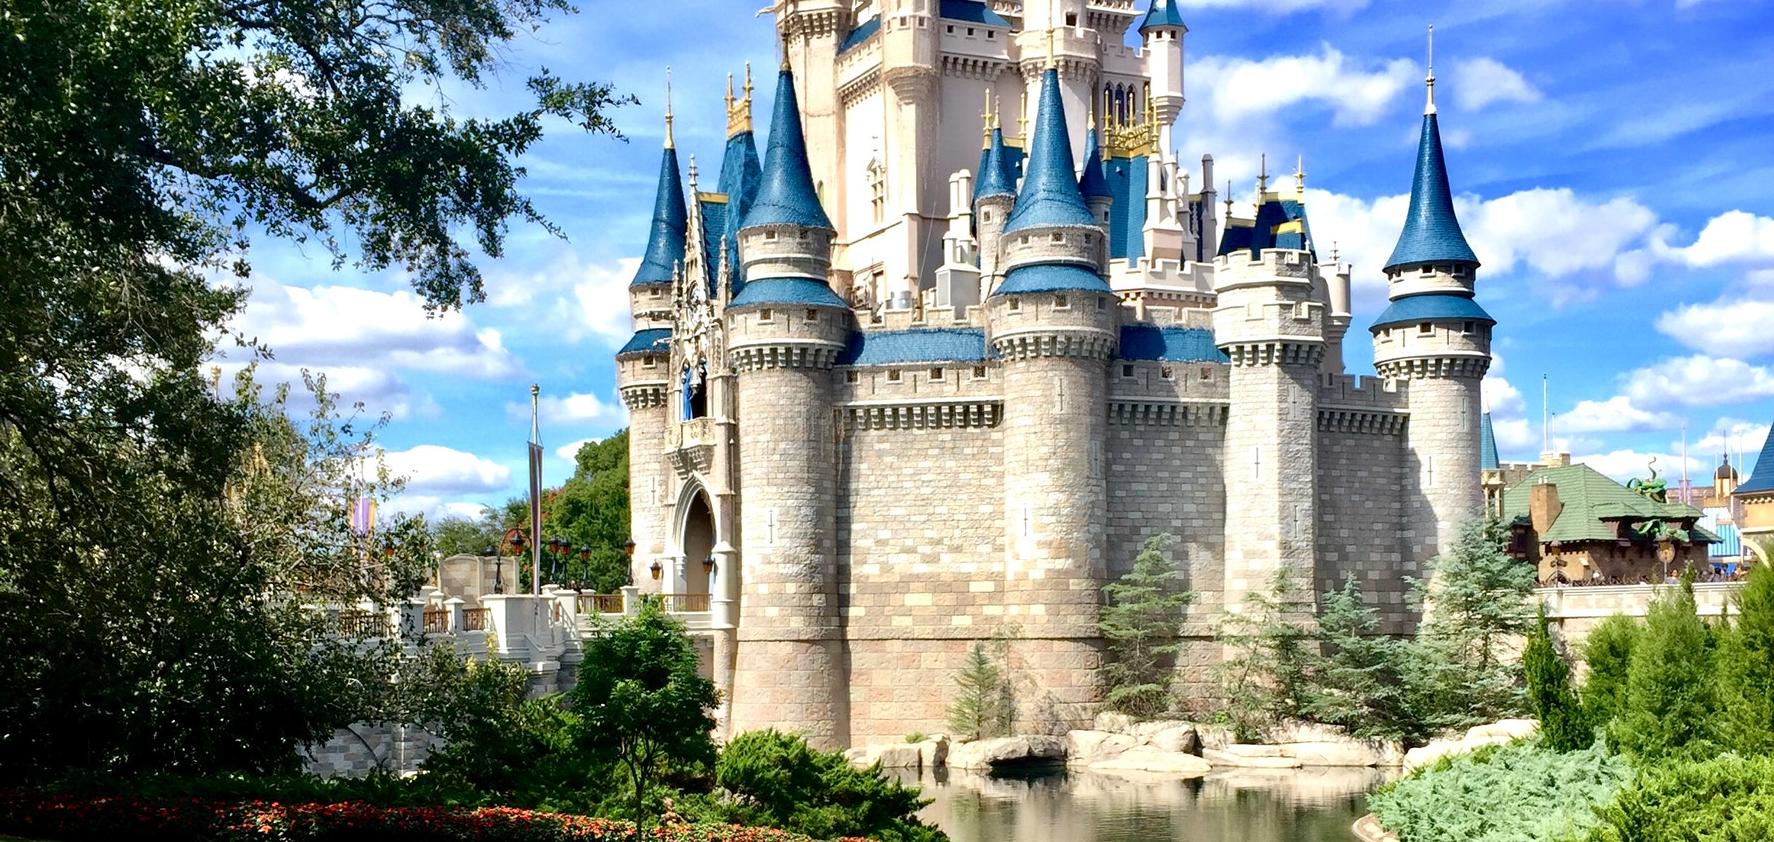 A princess needs a castle